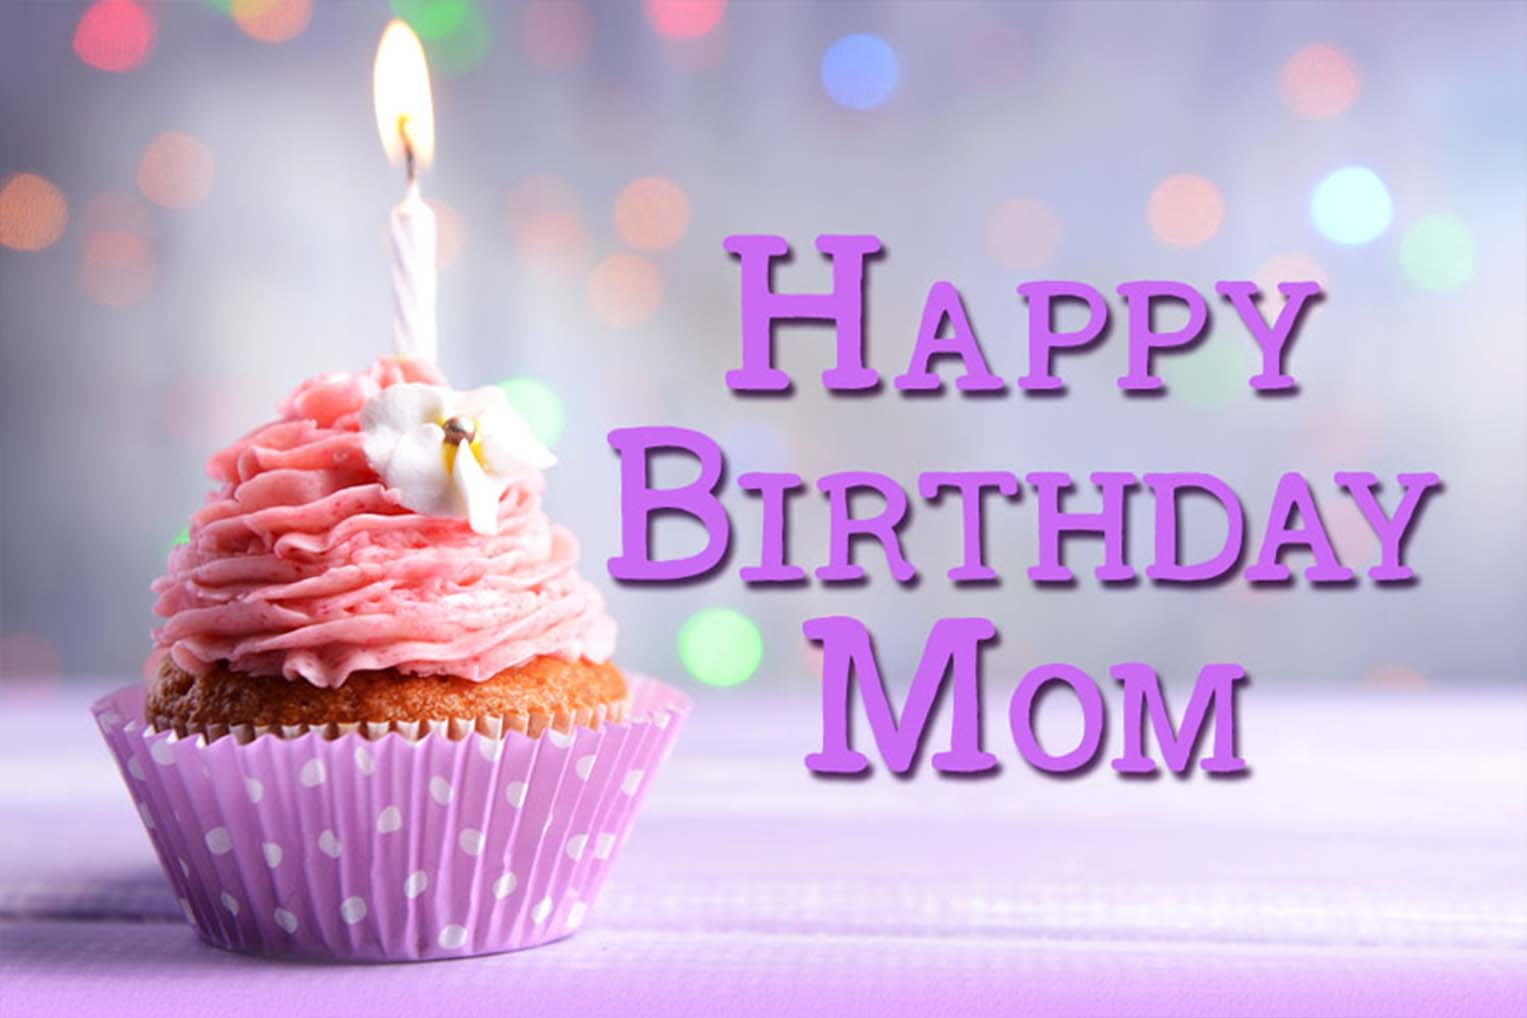 Happy Birthday Mom Wishes
 35 Happy Birthday Mom Quotes